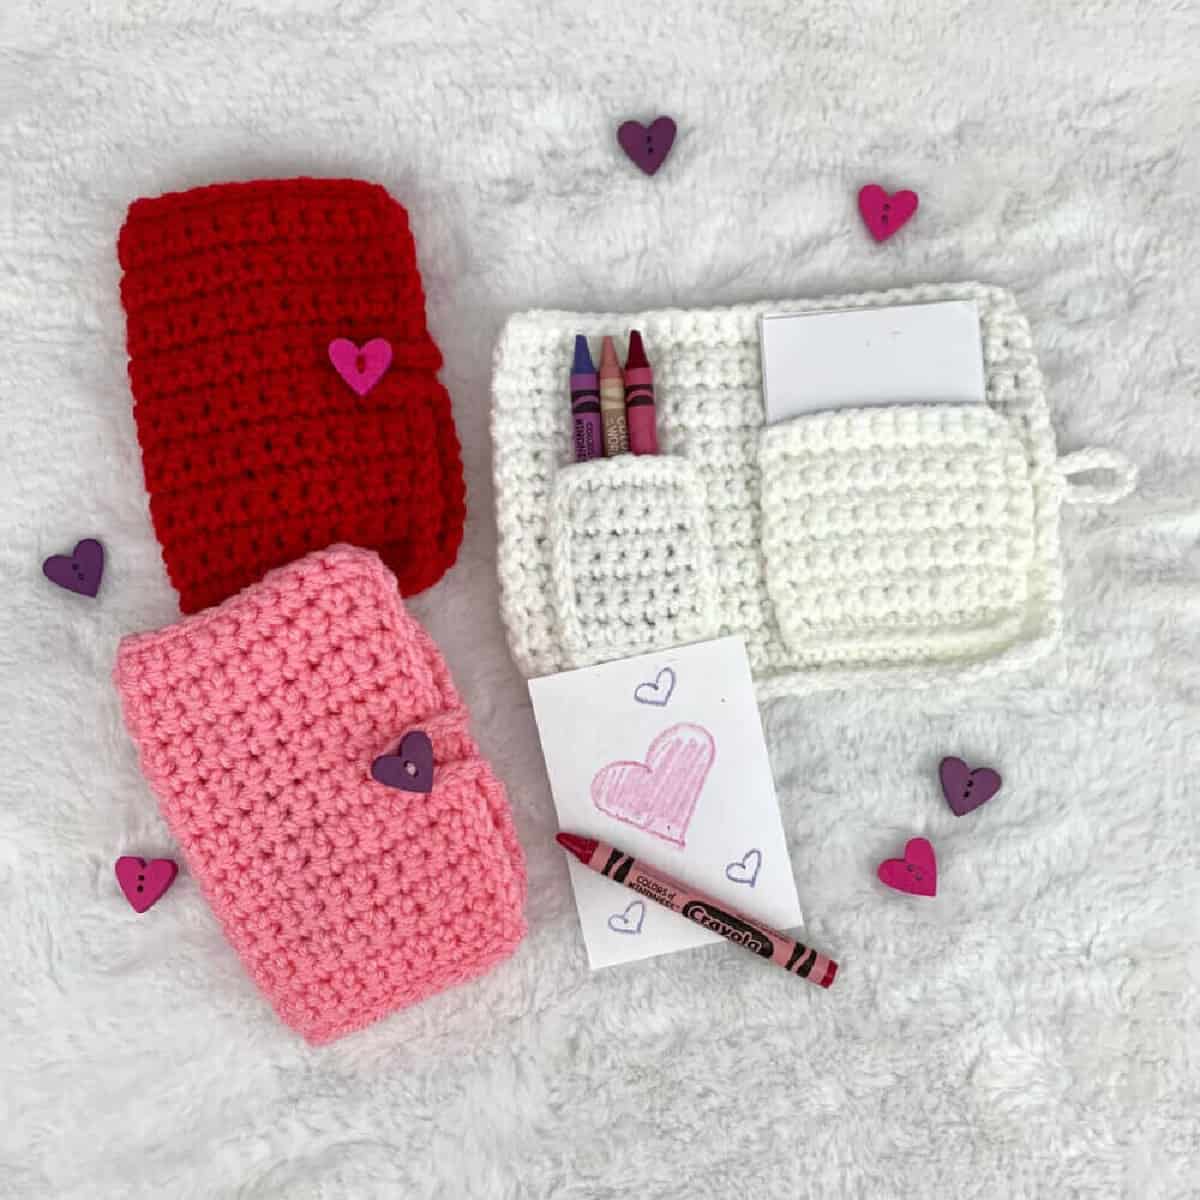 Heartstrings Fingerless Gloves Free Crochet Pattern - Kirsten Holloway  Designs